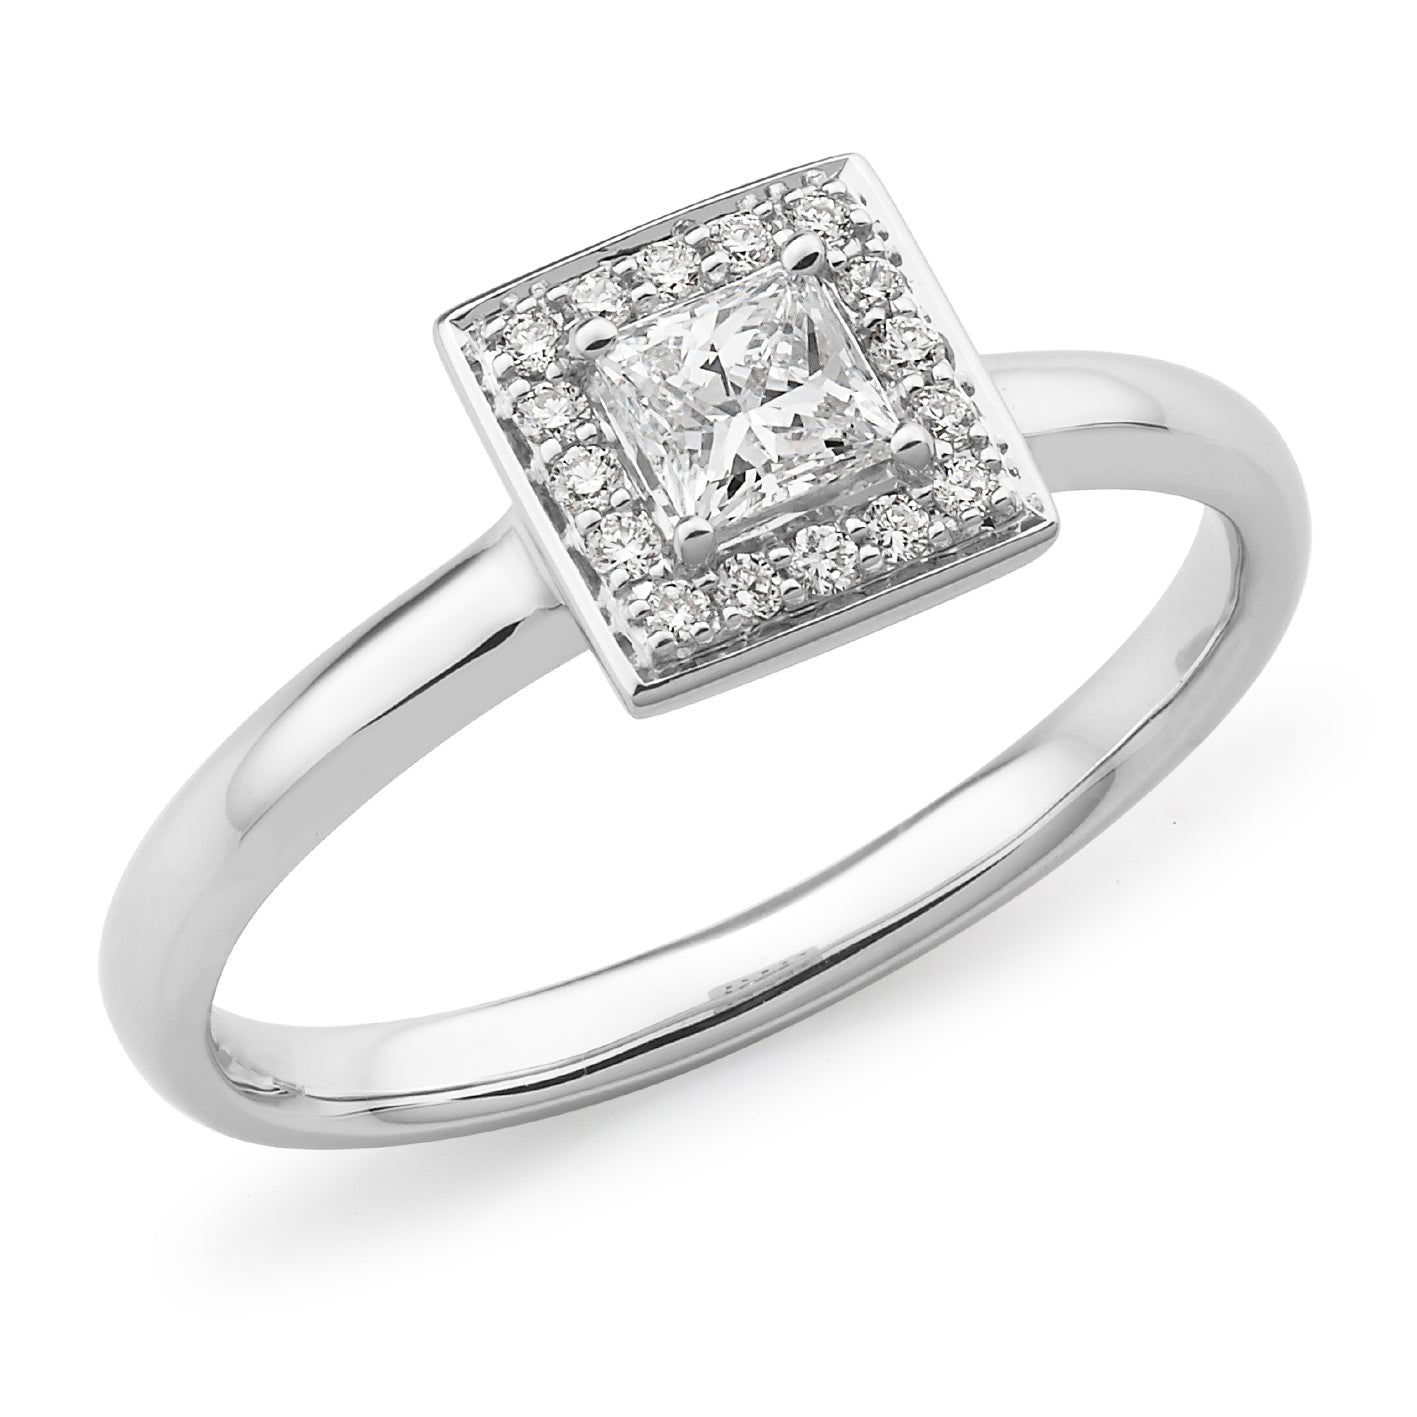 18ct White Gold Princess cut halo engagement ring 0.25 carat centre